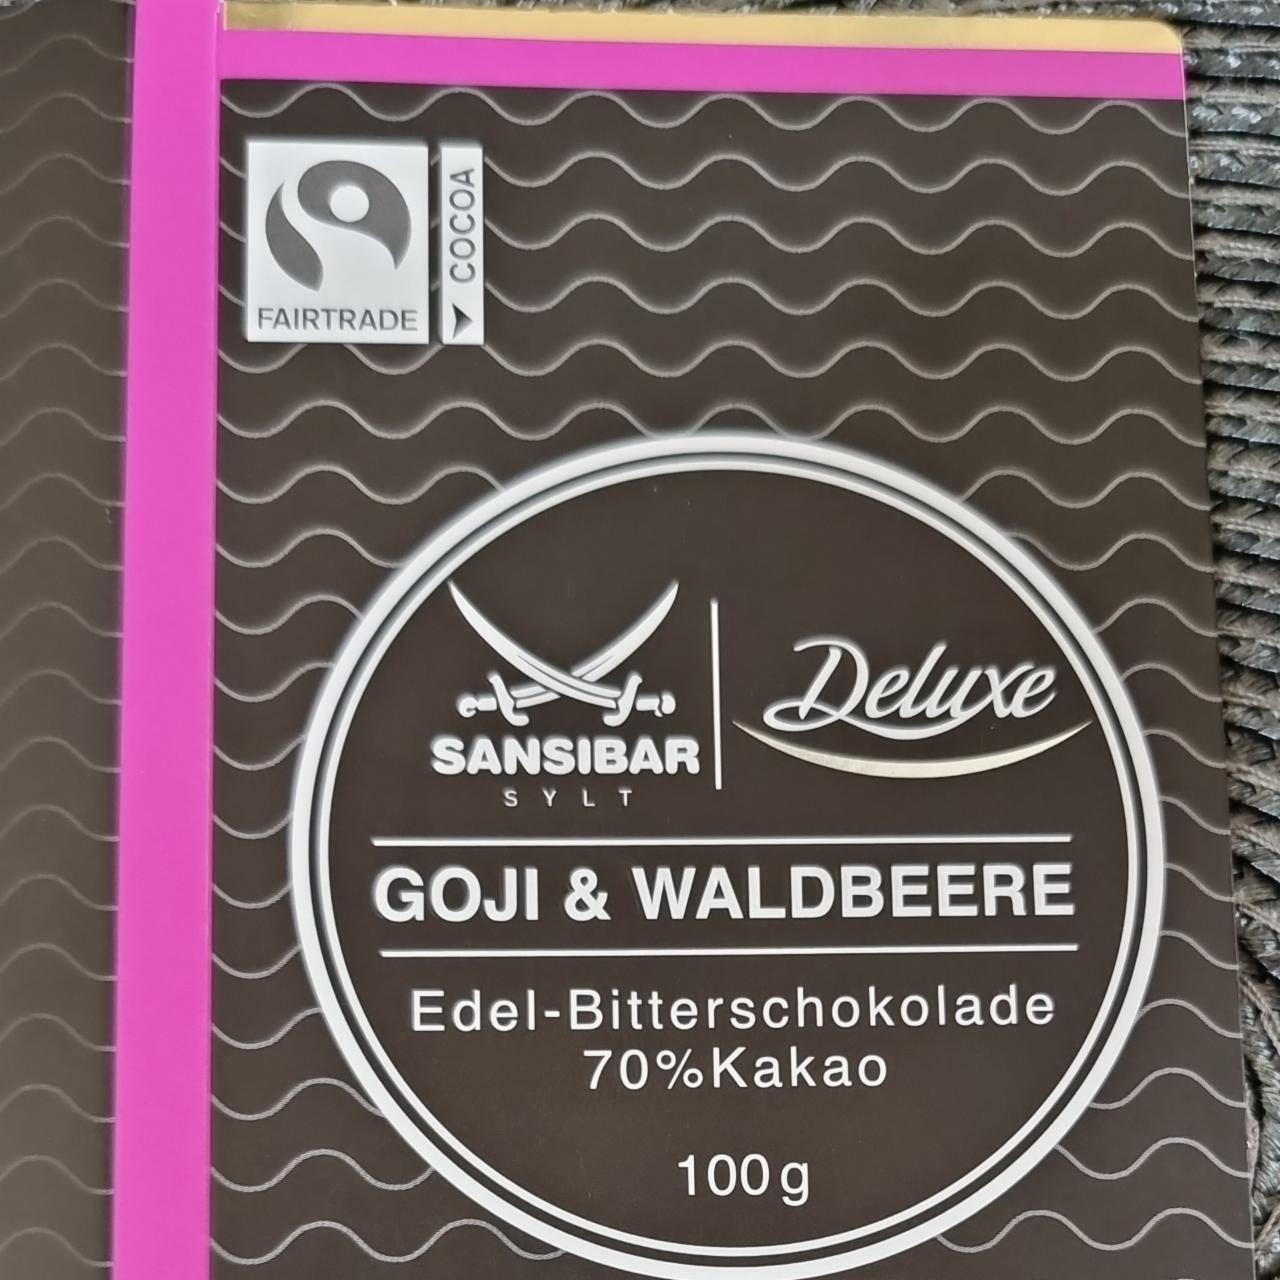 Fotografie - Goji & Waldbeere Edel-Bitterschokolade 70% Kakao Deluxe